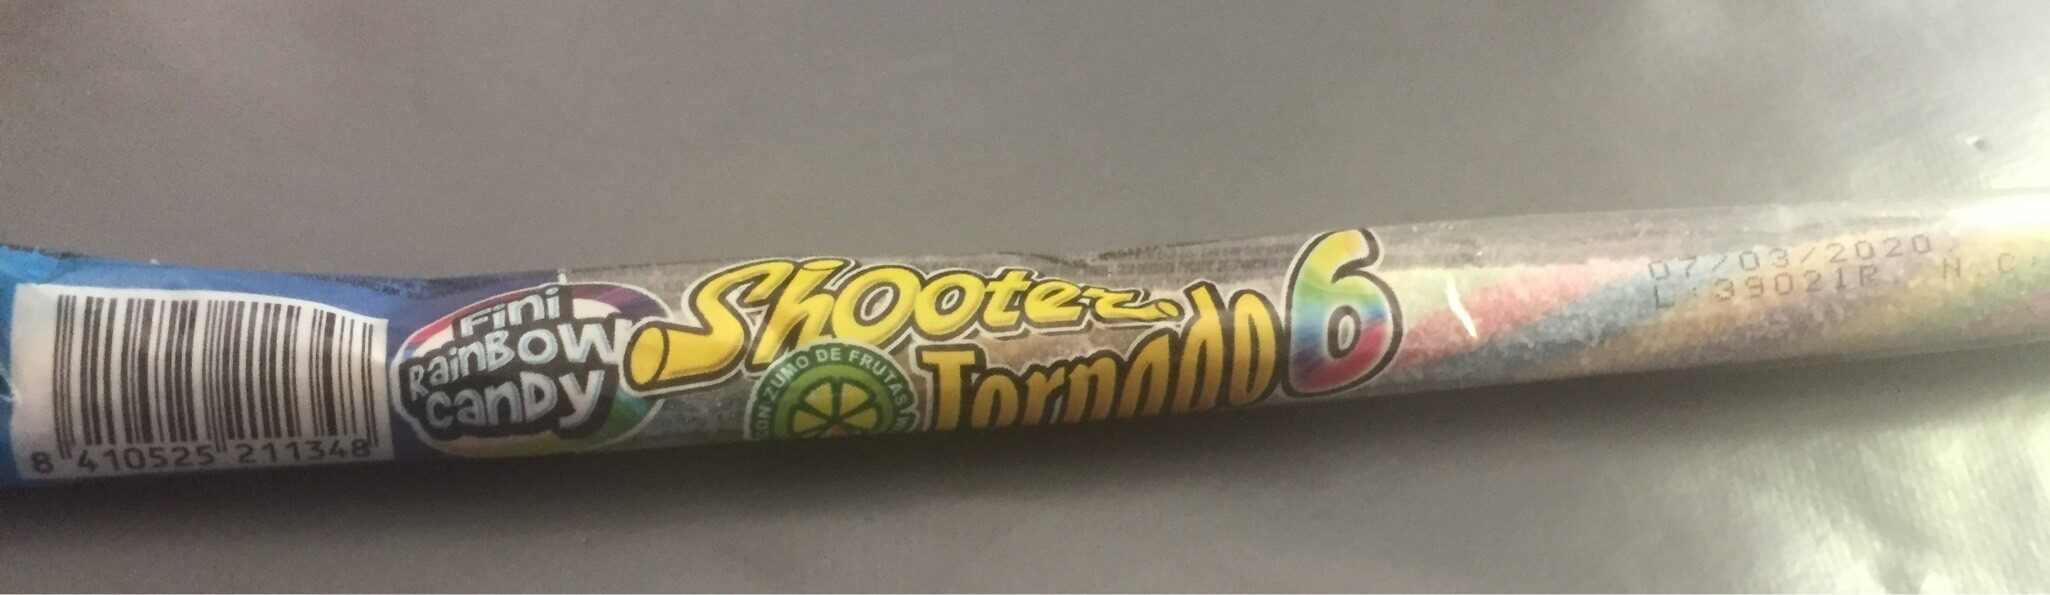 Shooter Tornado 6 - Produit